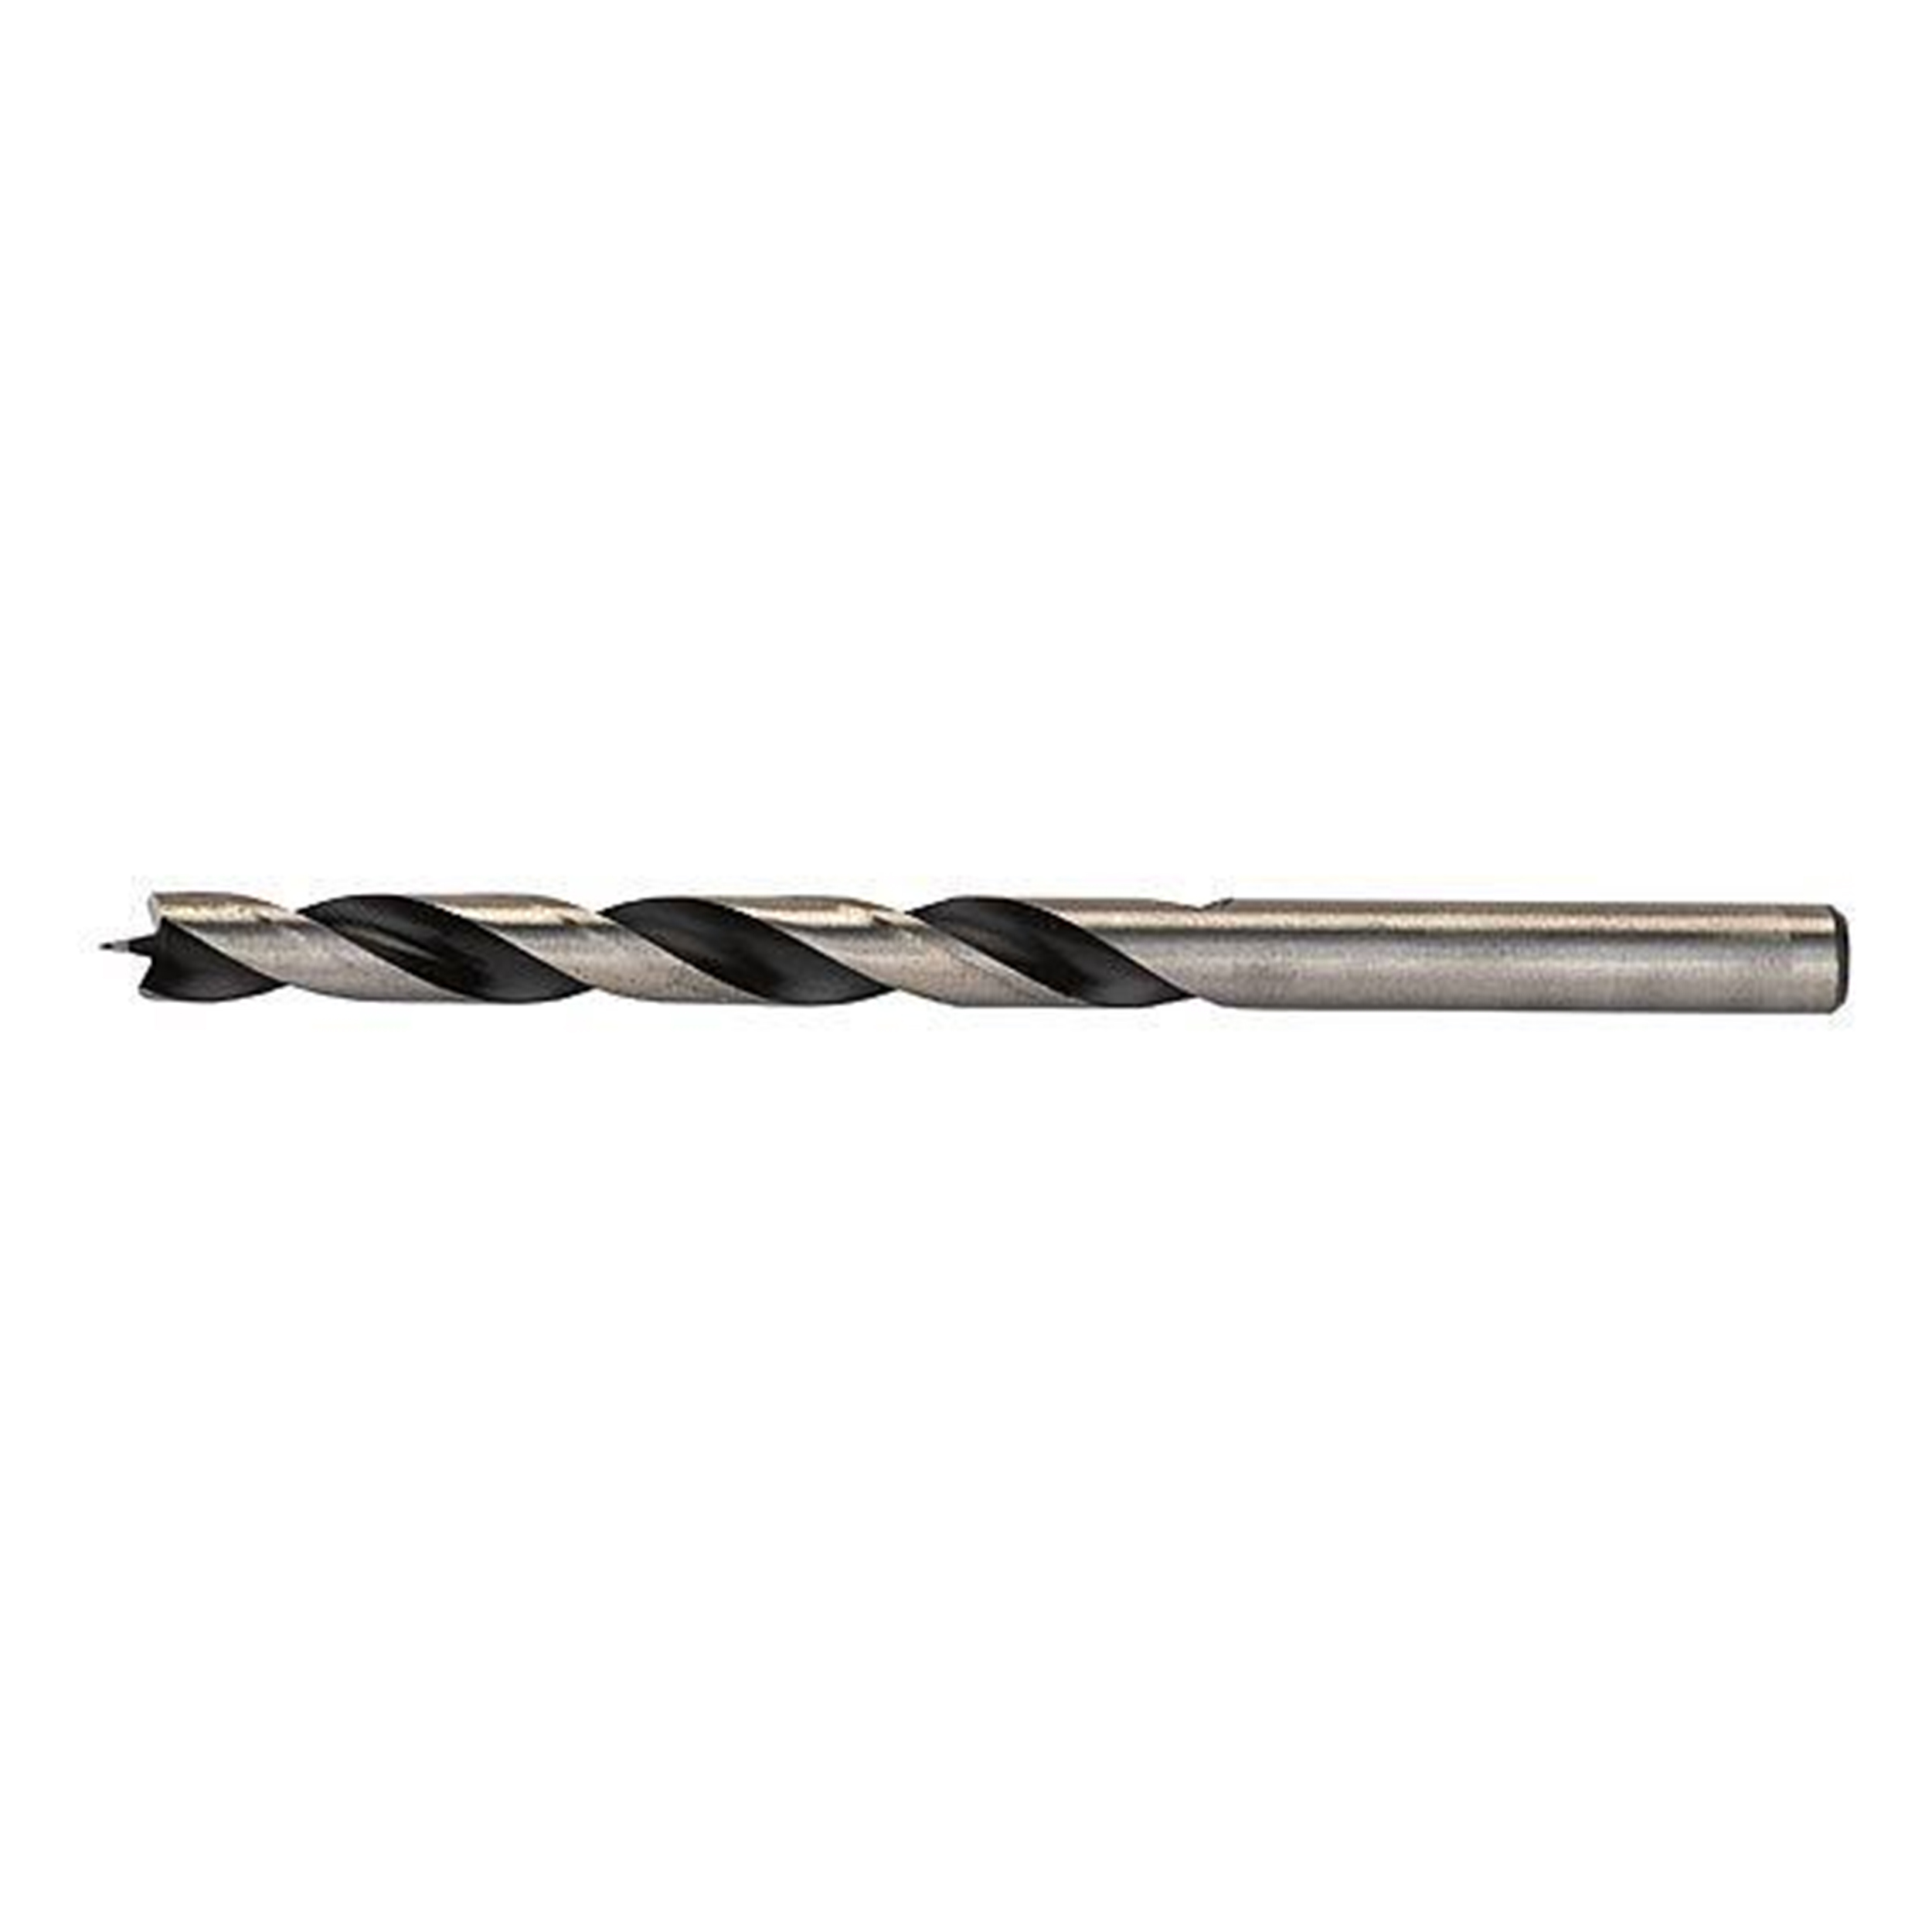 6mm Chrome-vanadium Steel Brad Point Drill Bit